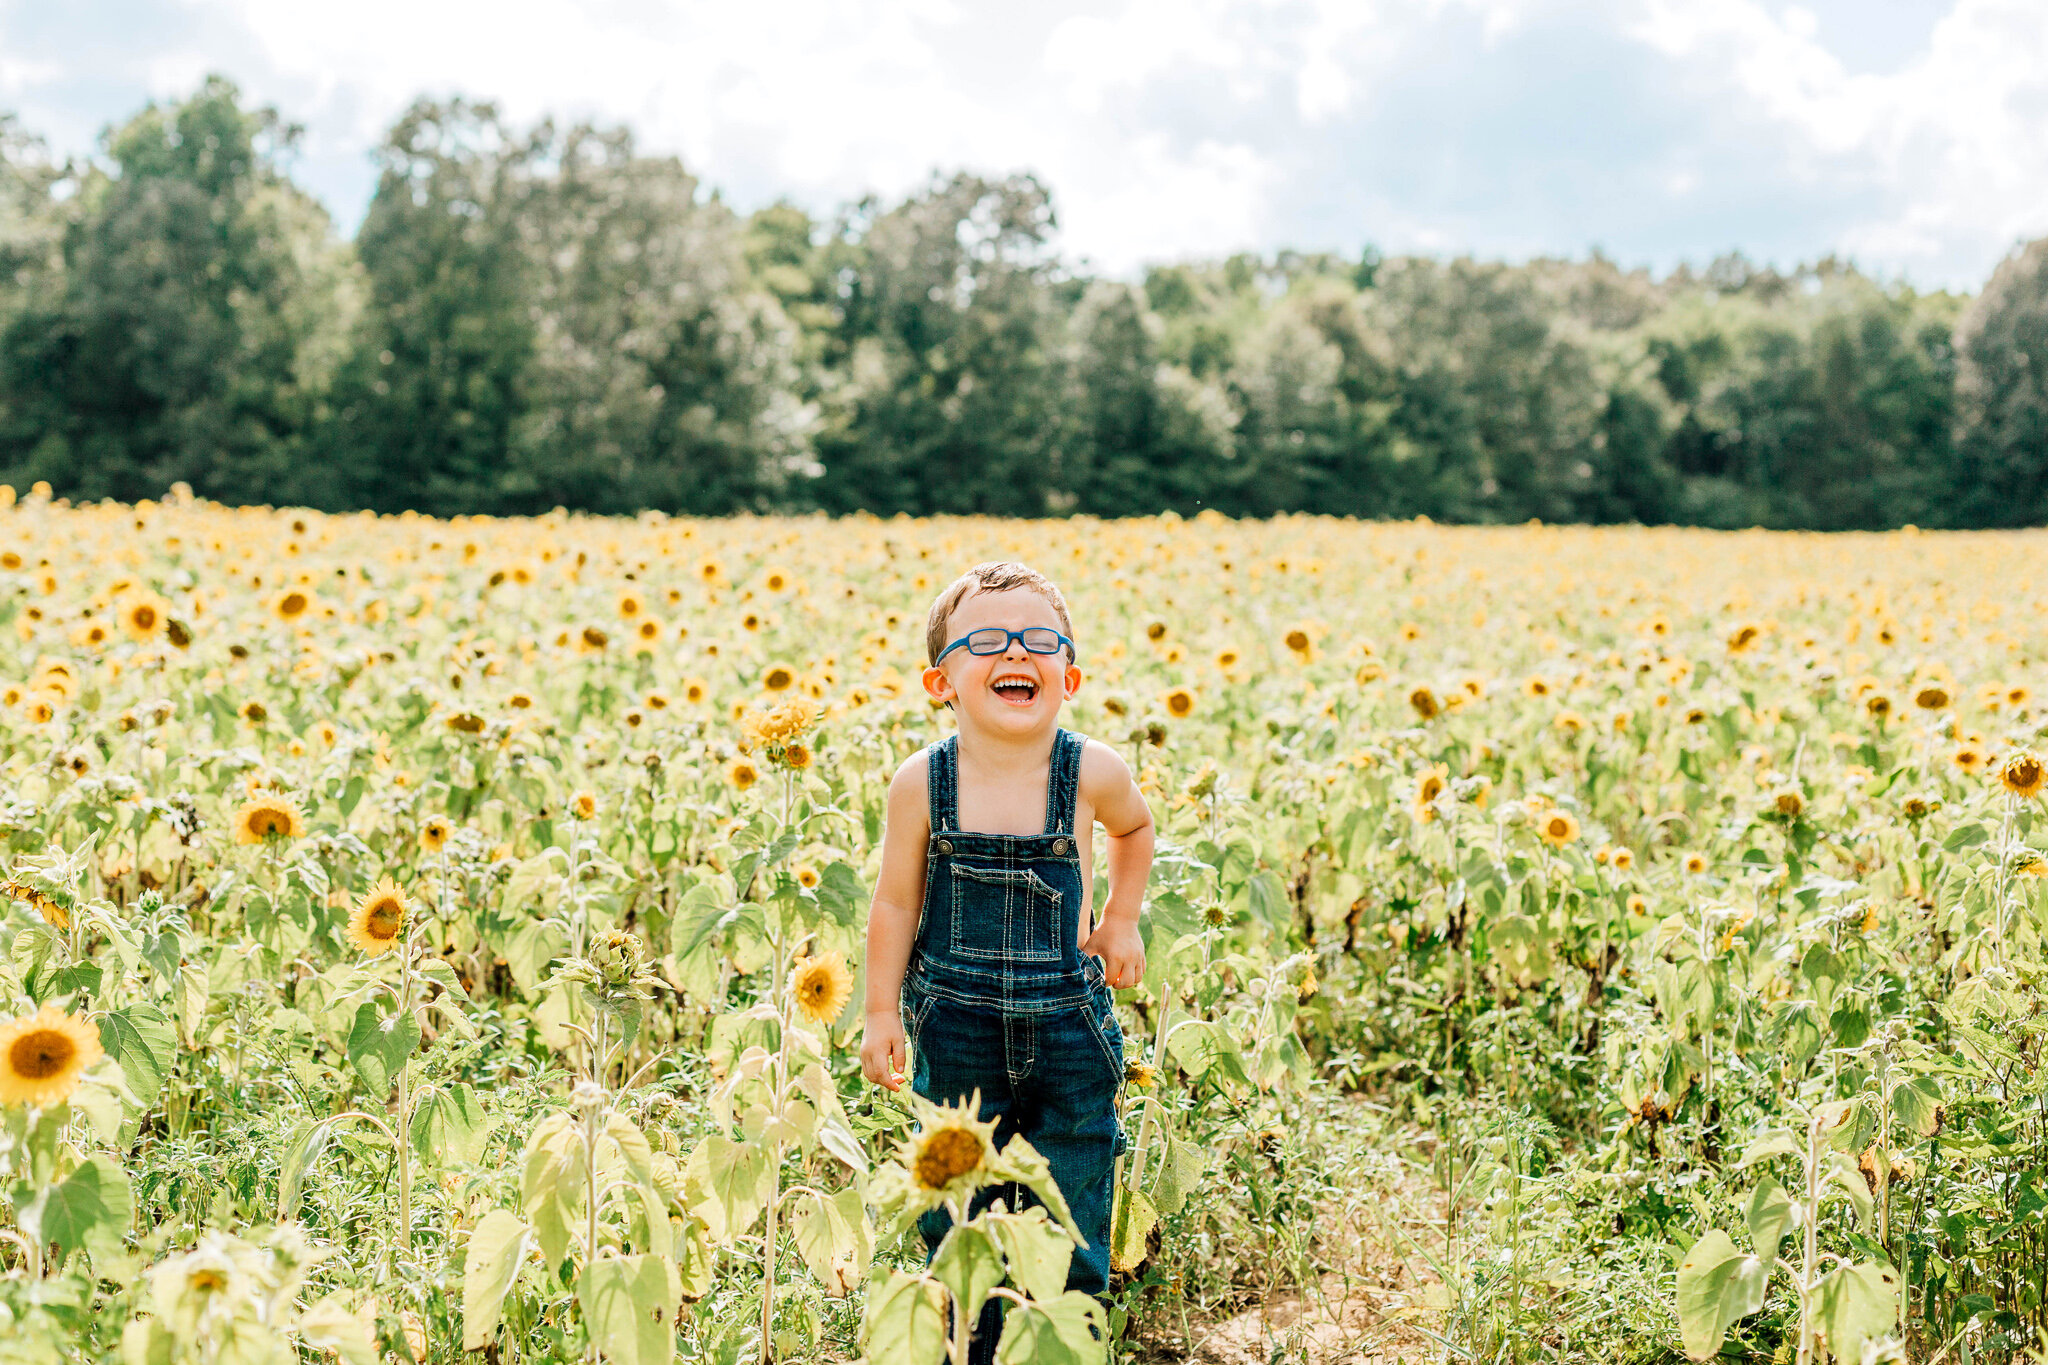 Sunflower Family Session | Cord, Arkansas | As The Crow Flies Photographer